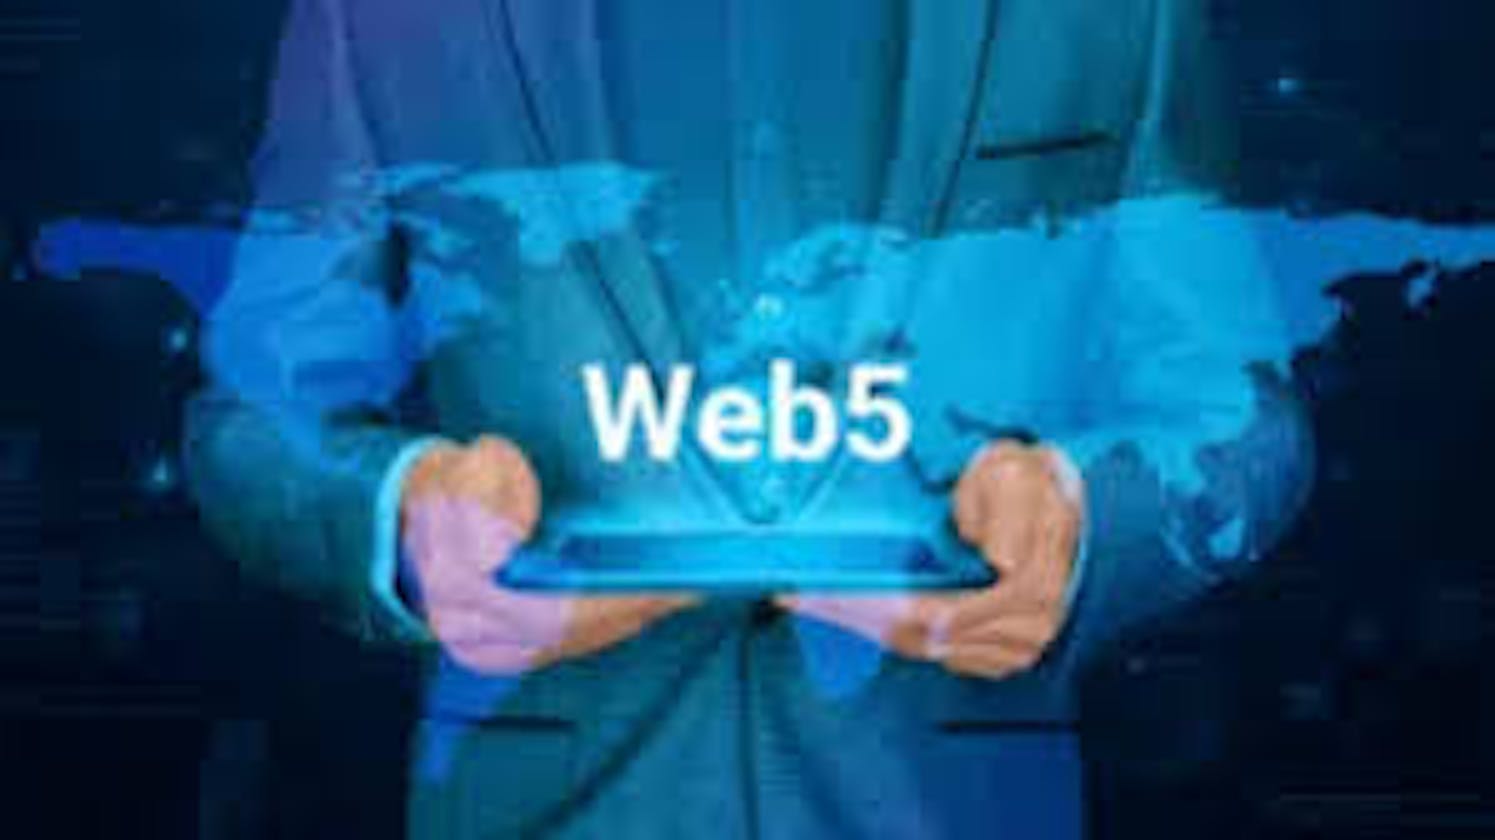 Web 5 - The Decentralized Internet